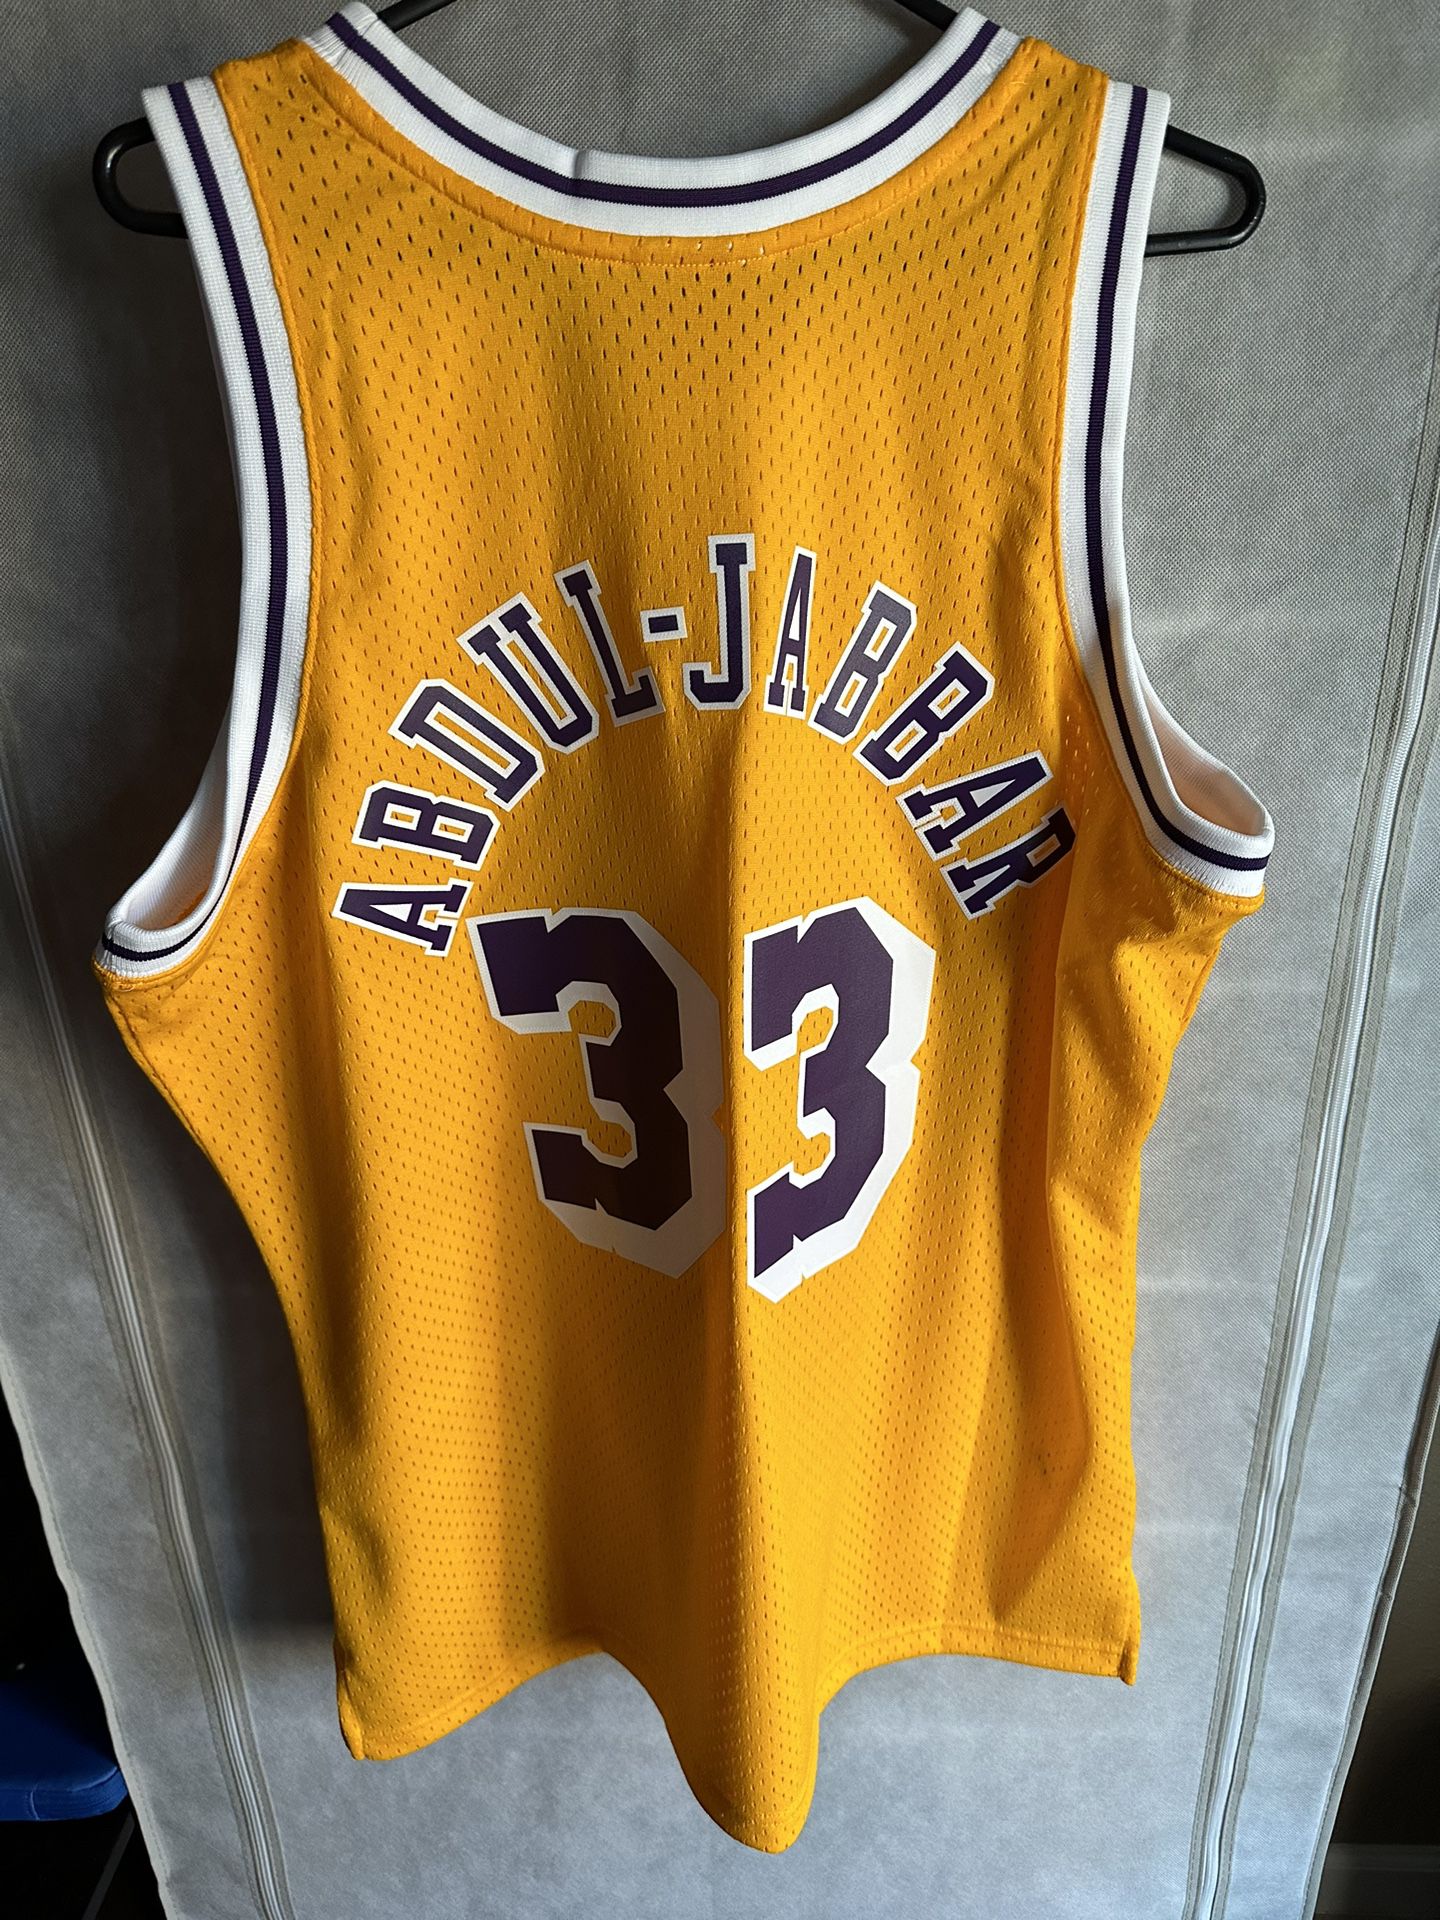 Vintage UCLA Kareem Abdul Jabbar Basketball Jersey for Sale in Los Angeles,  CA - OfferUp